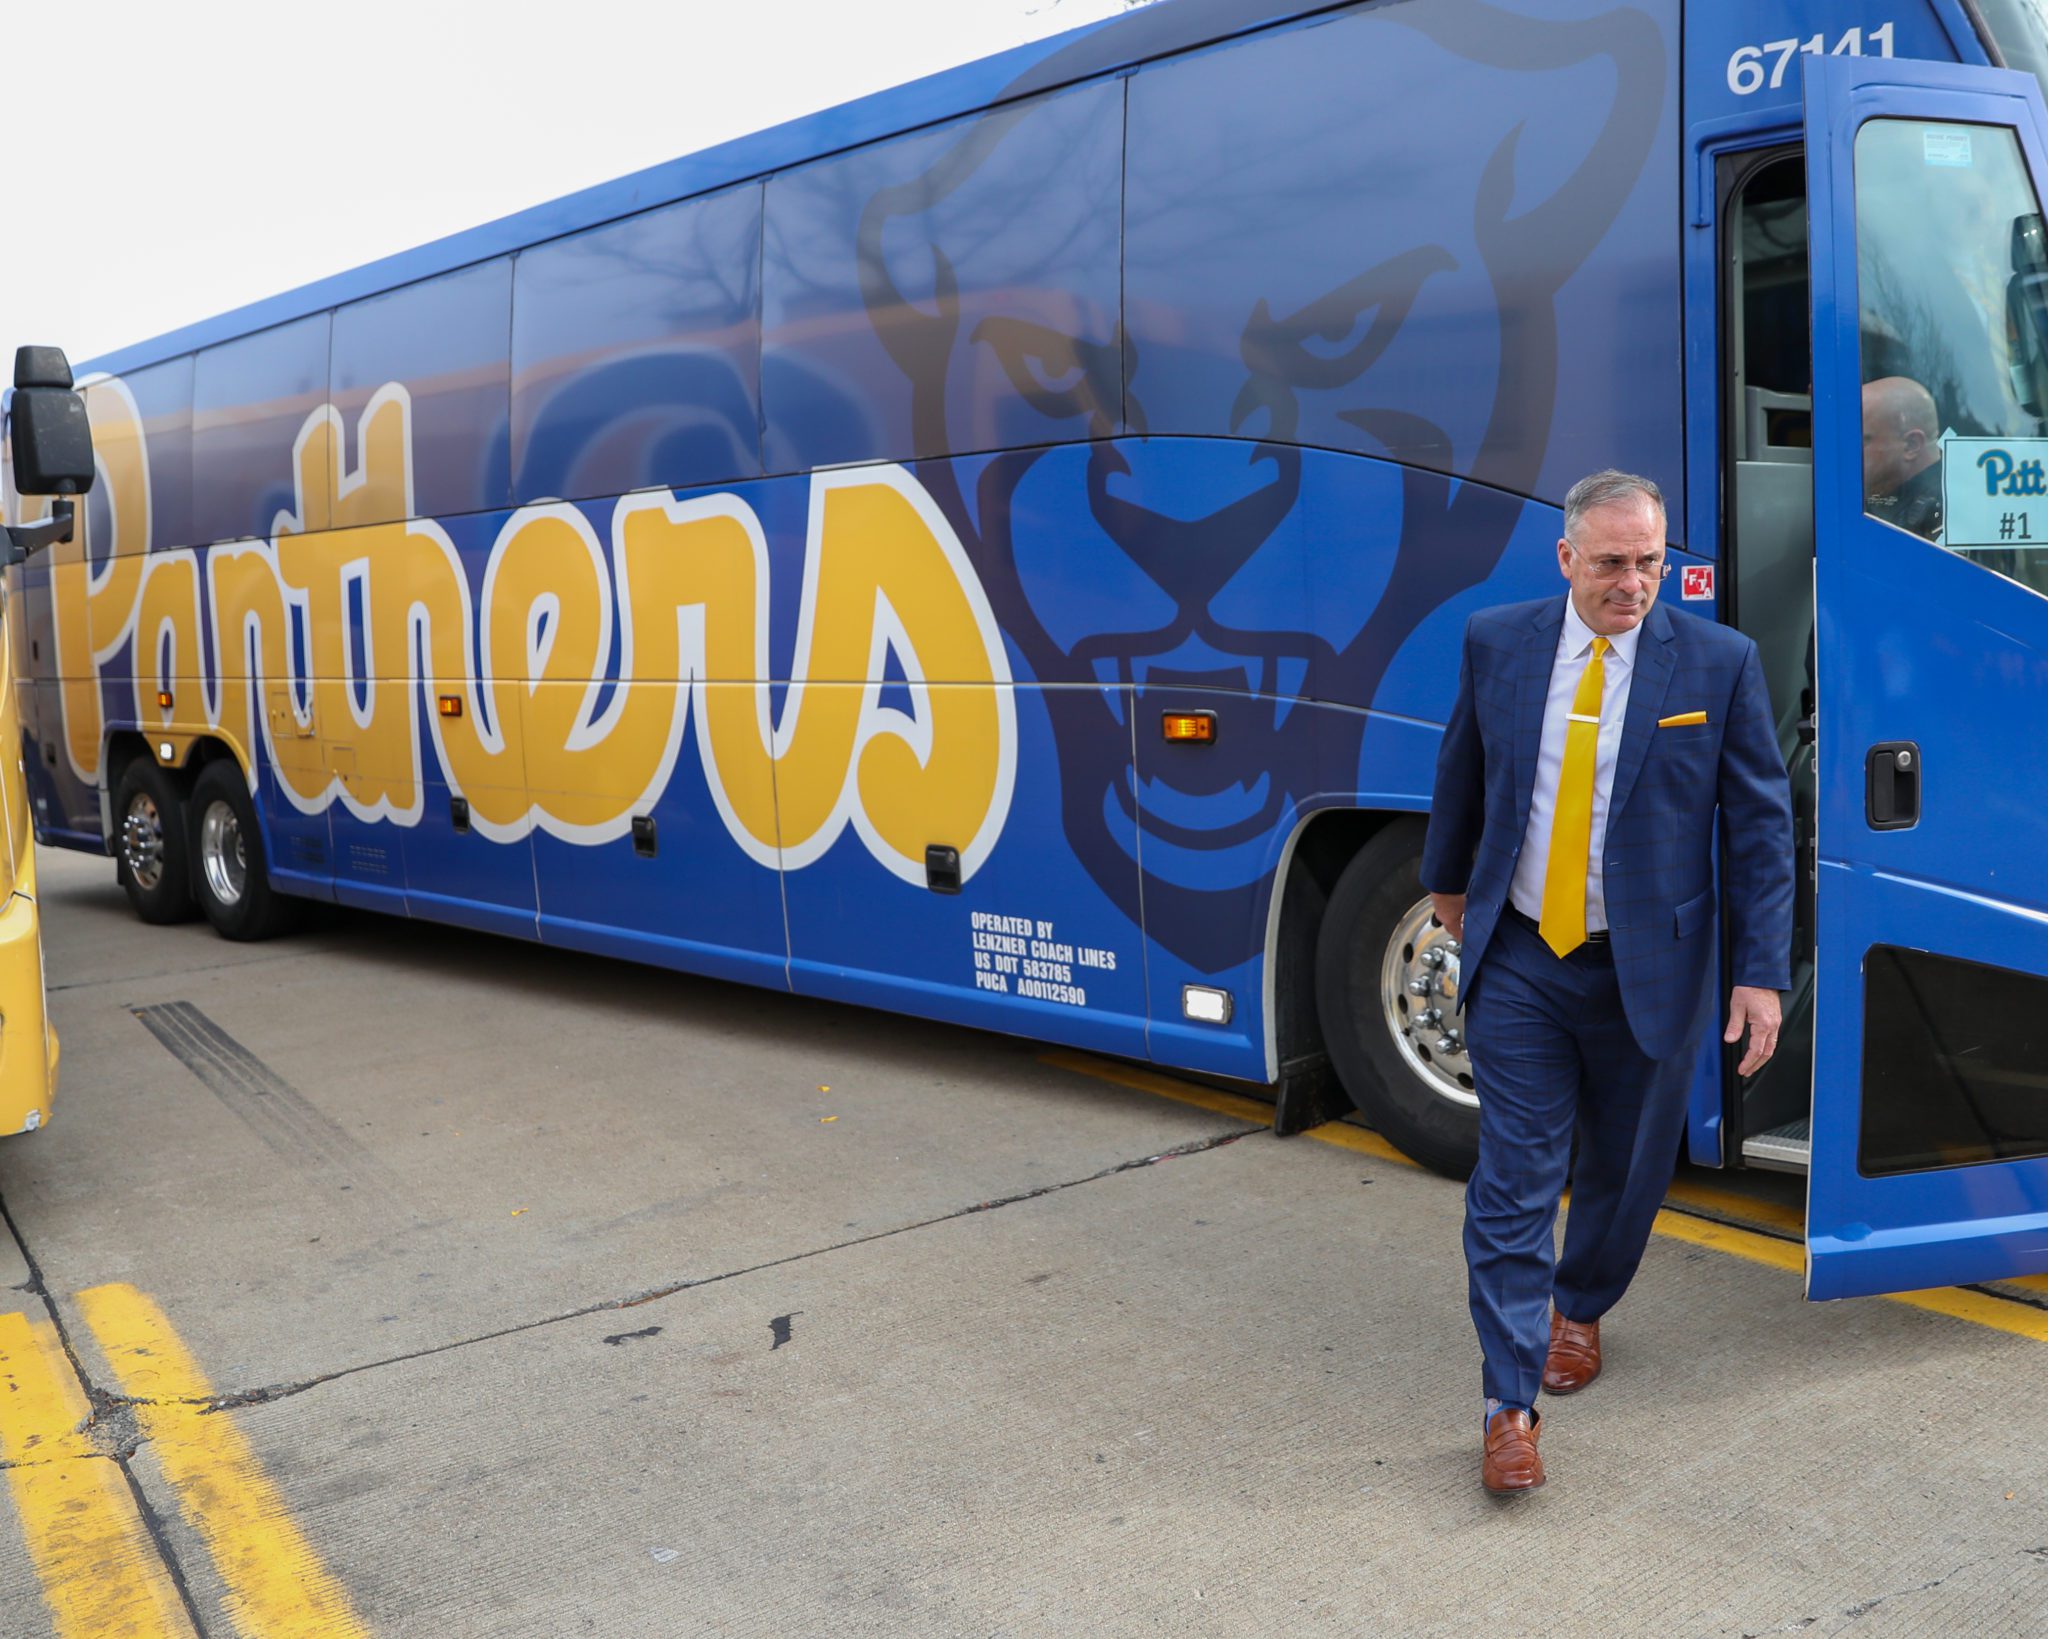 Pitt football bus with head coach Pat Narduzzi coming off.